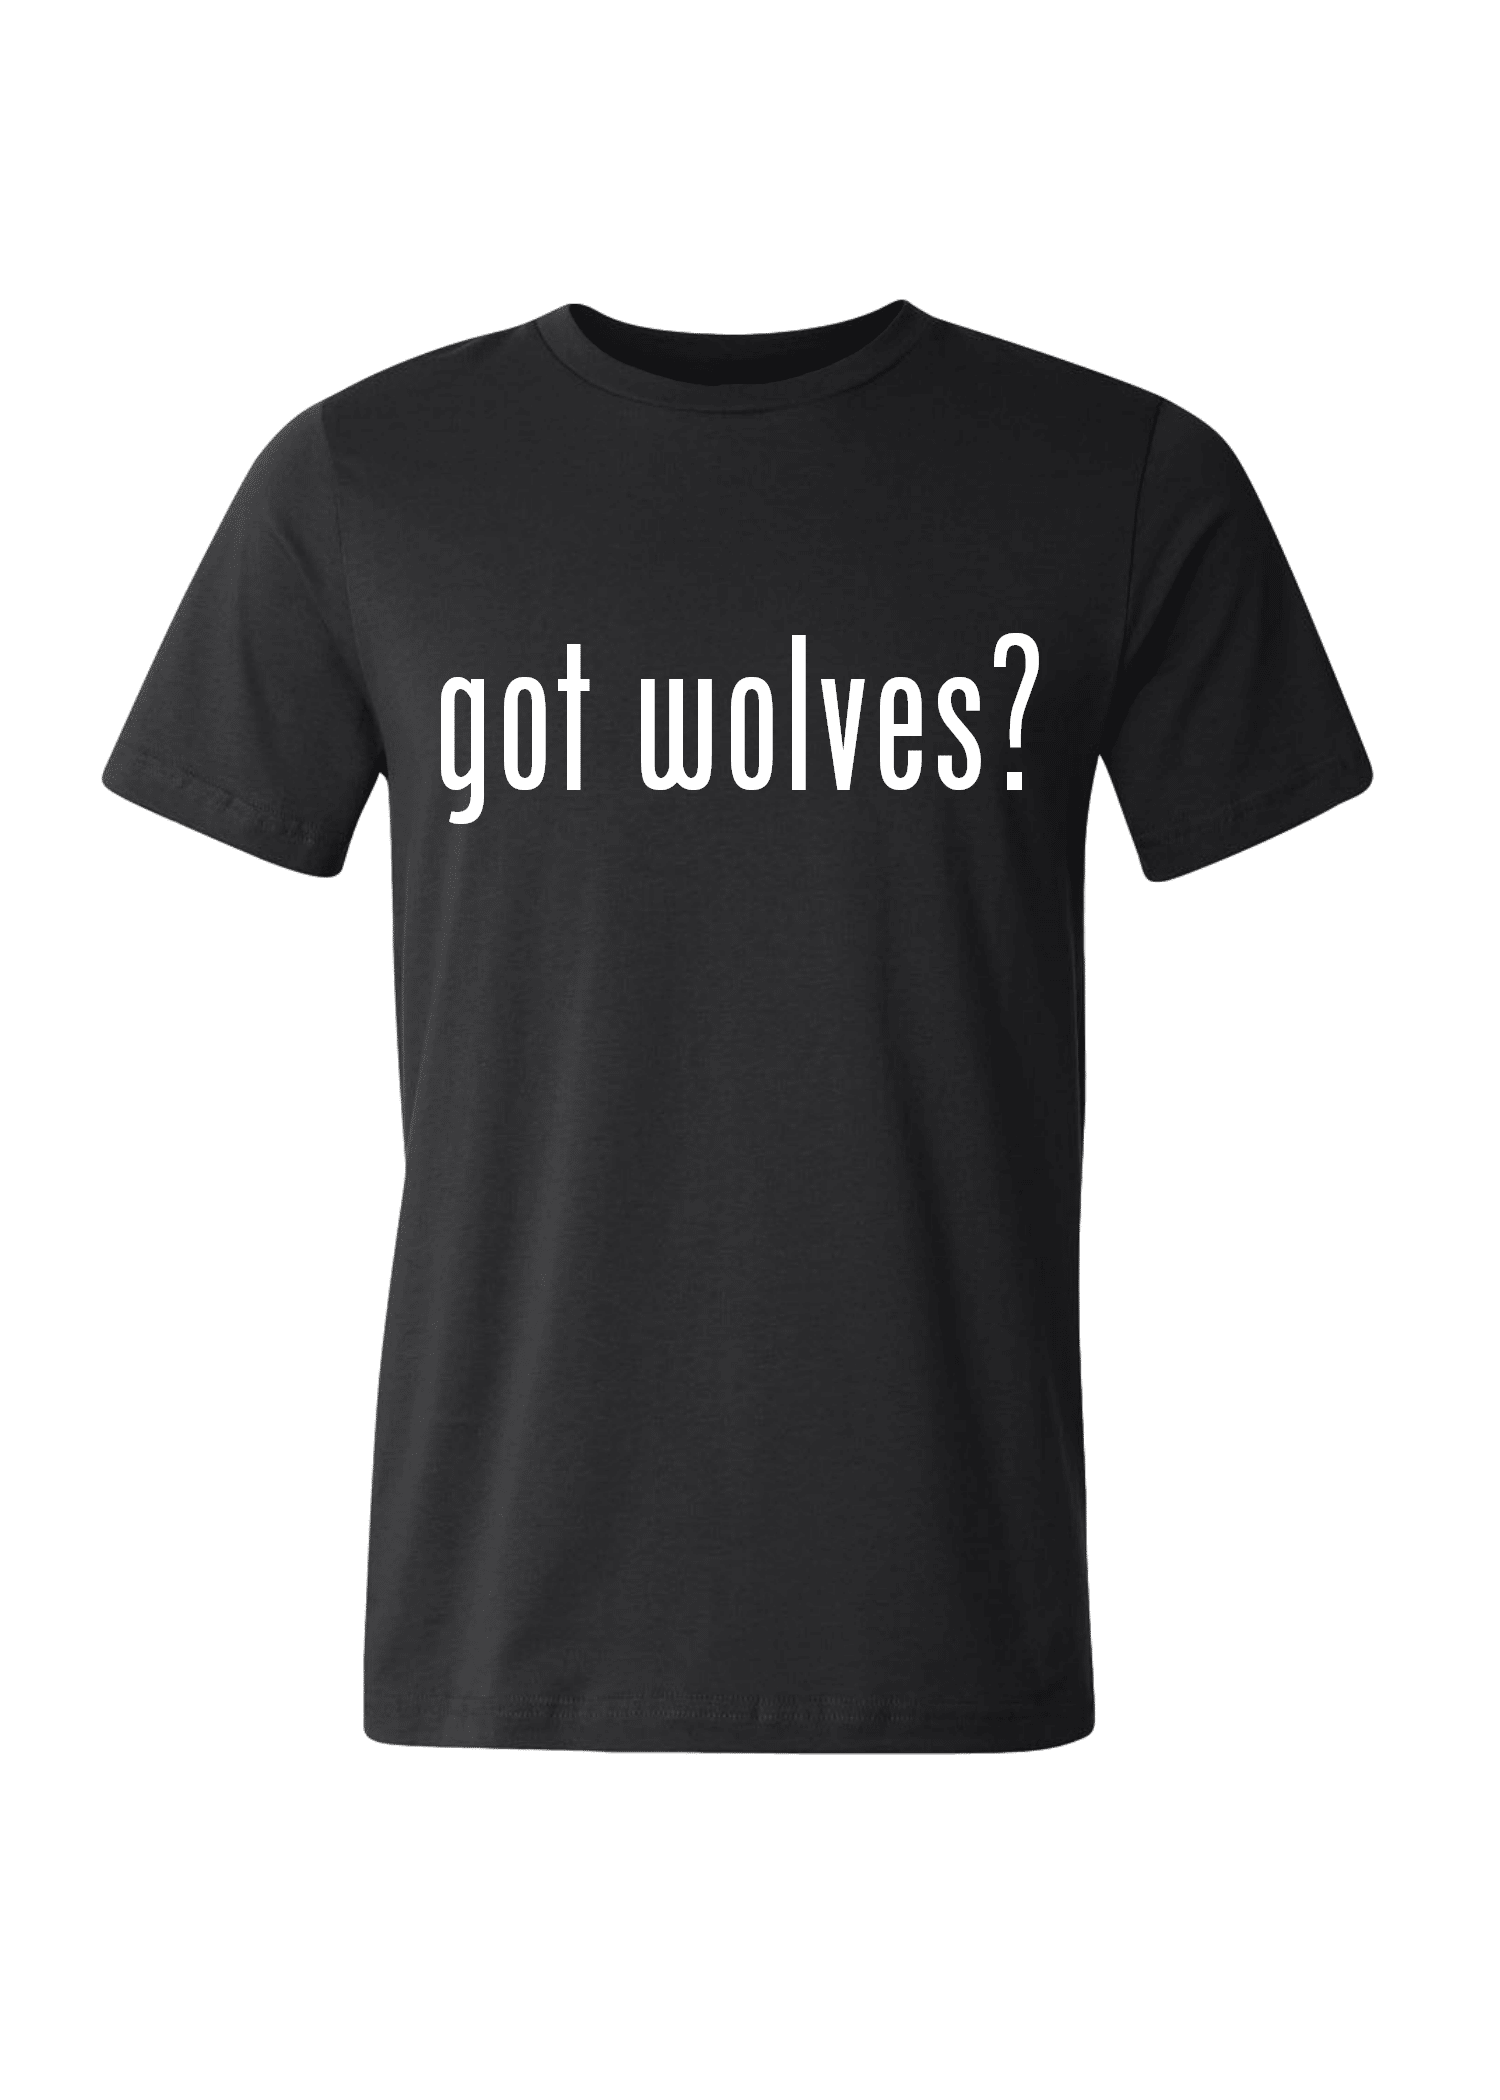 Buy > wolf logo shirt > in stock